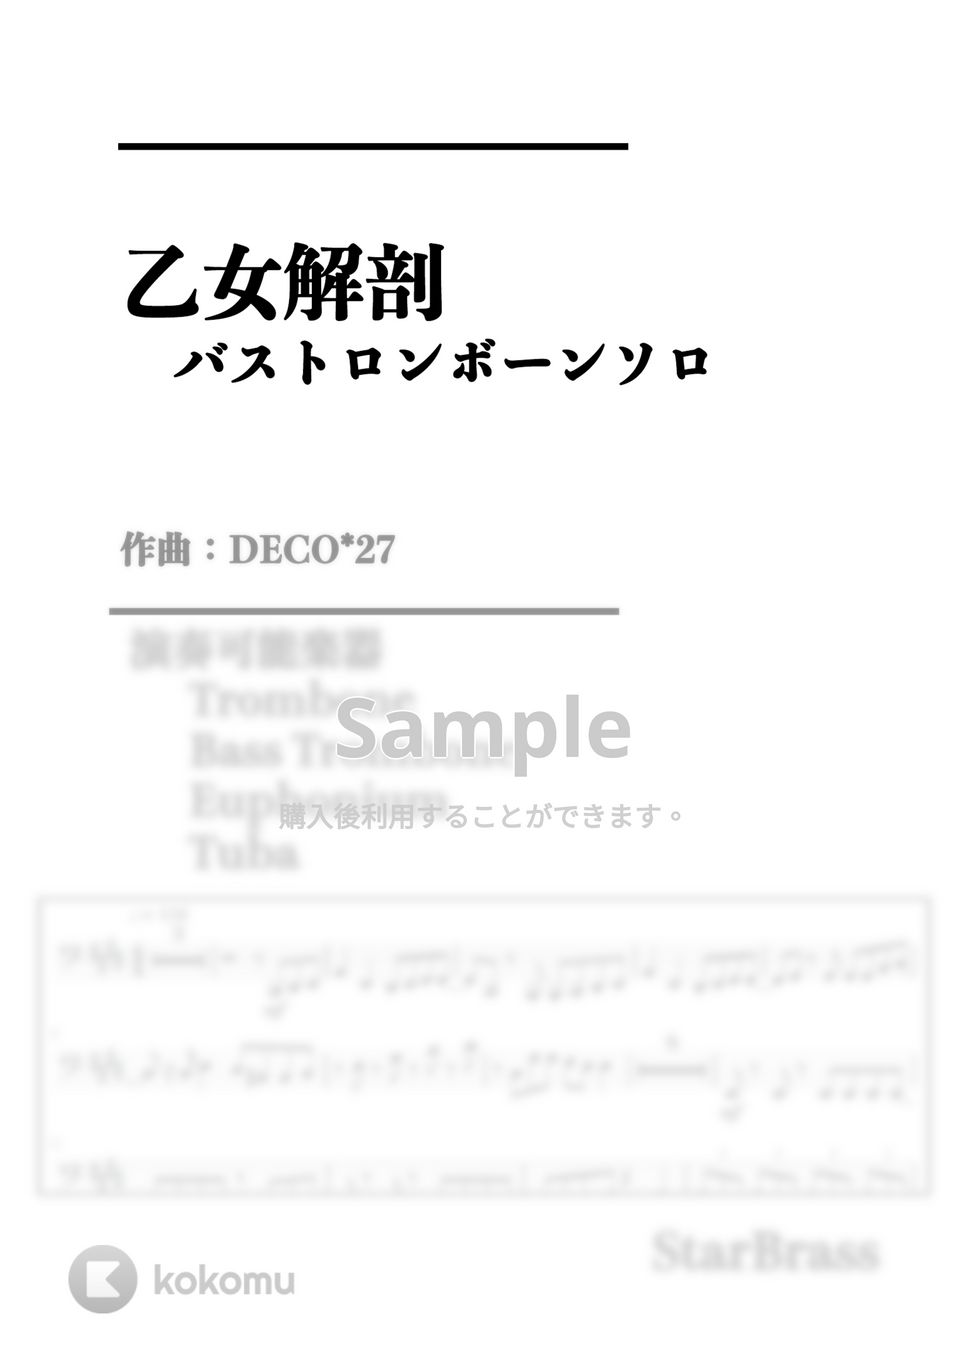 DECO*27 - 乙女解剖 (-Bass Trombone Solo- 原キー) by Creampuff